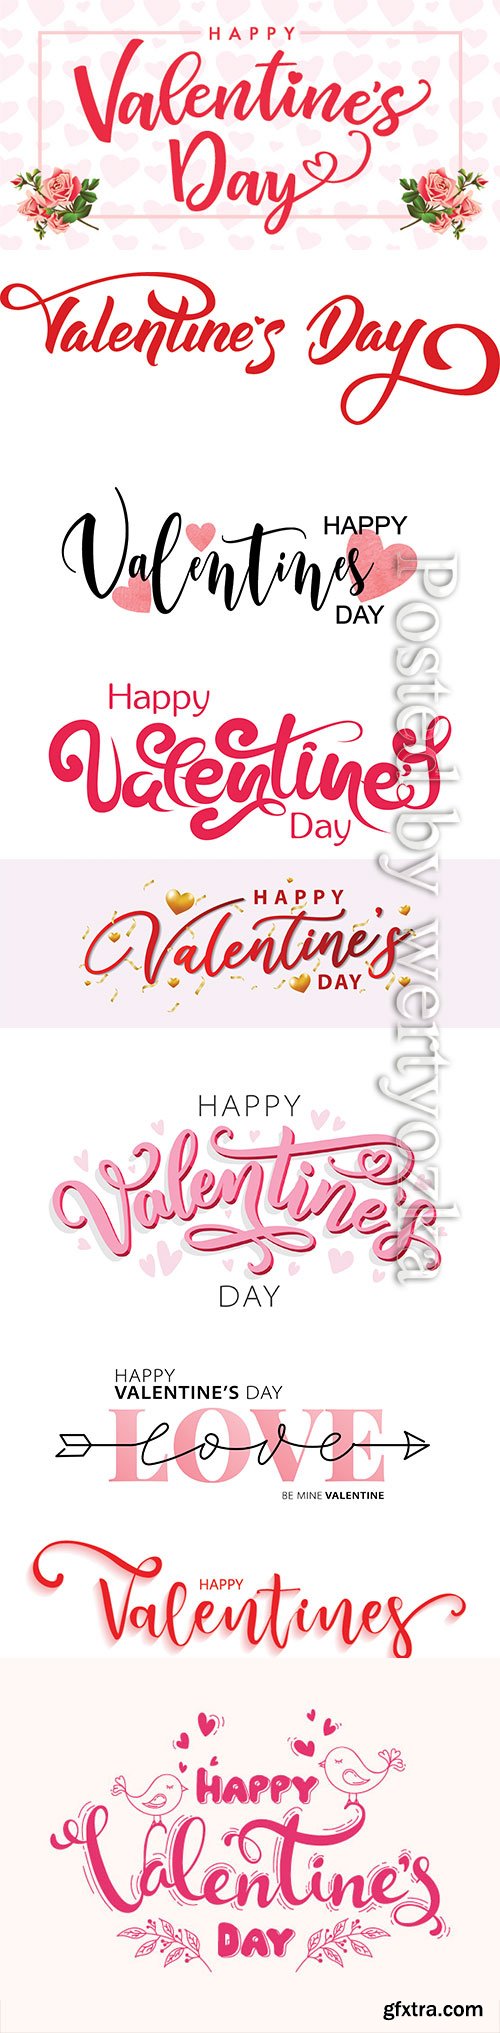 Happy Valentines Day elegant сalligraphy banner